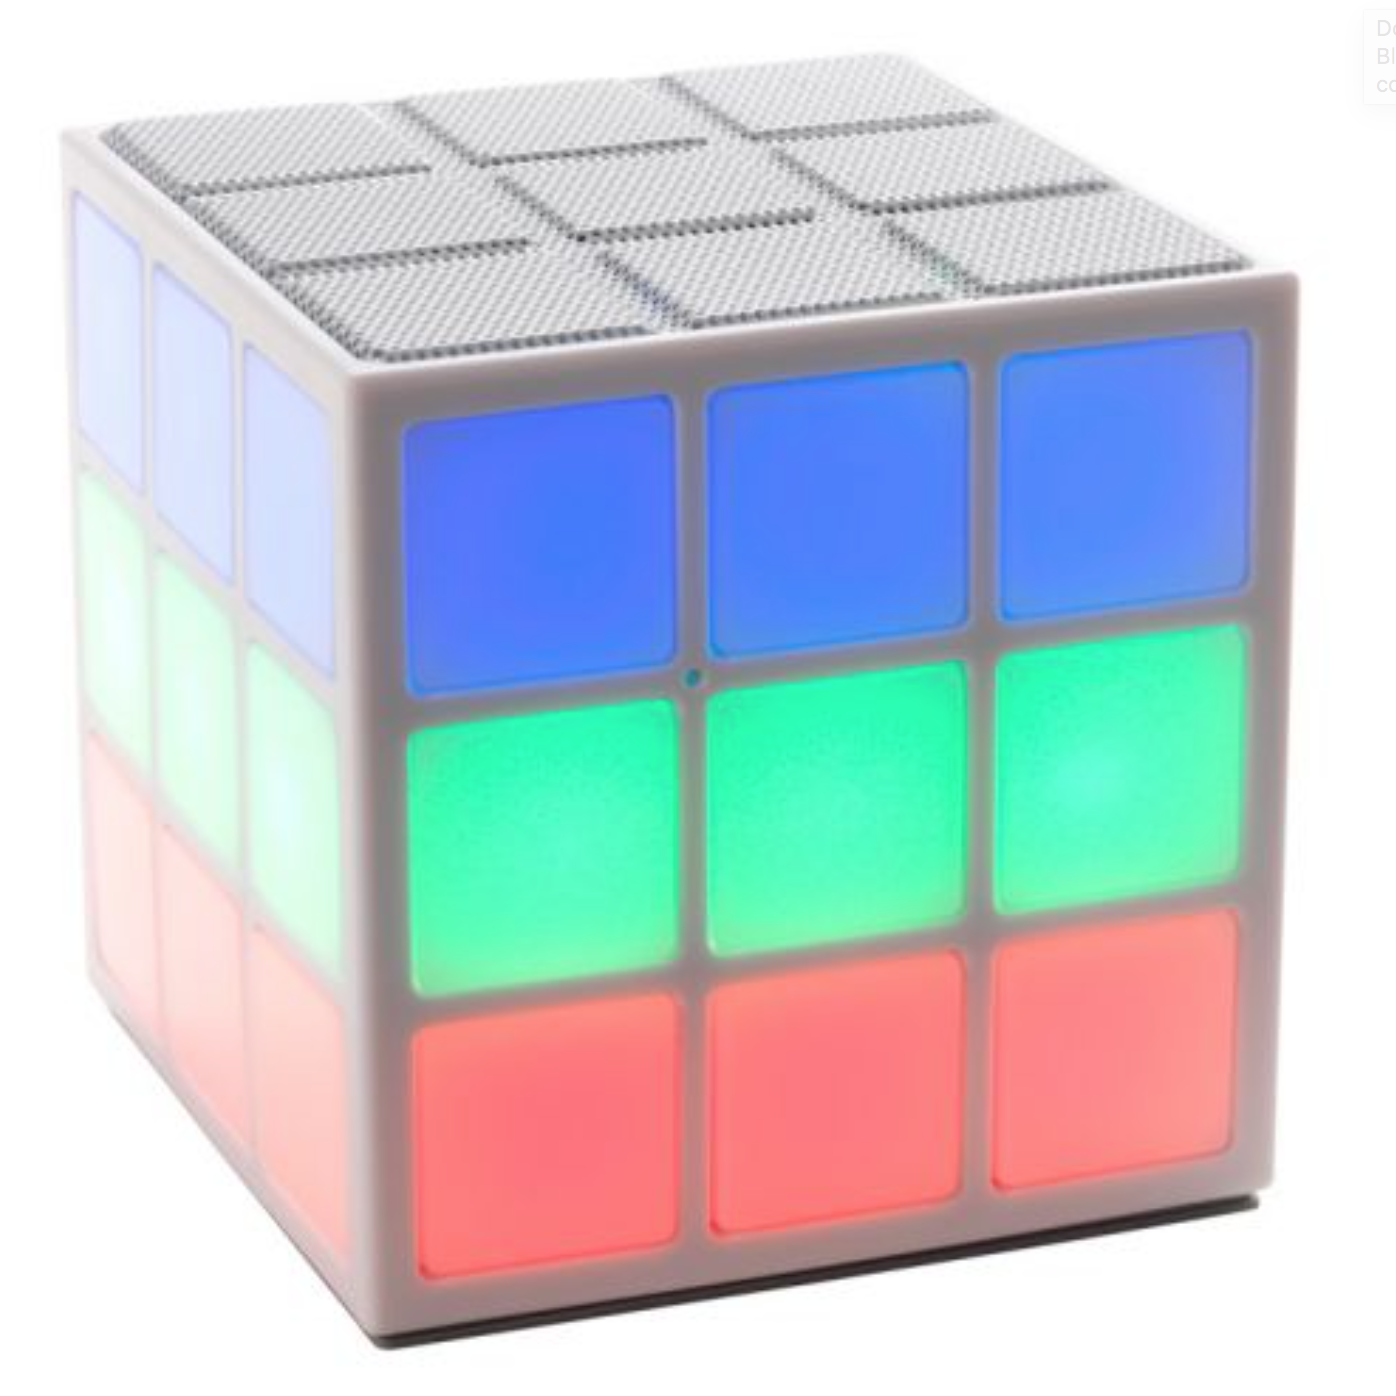 LED Rubik's cube